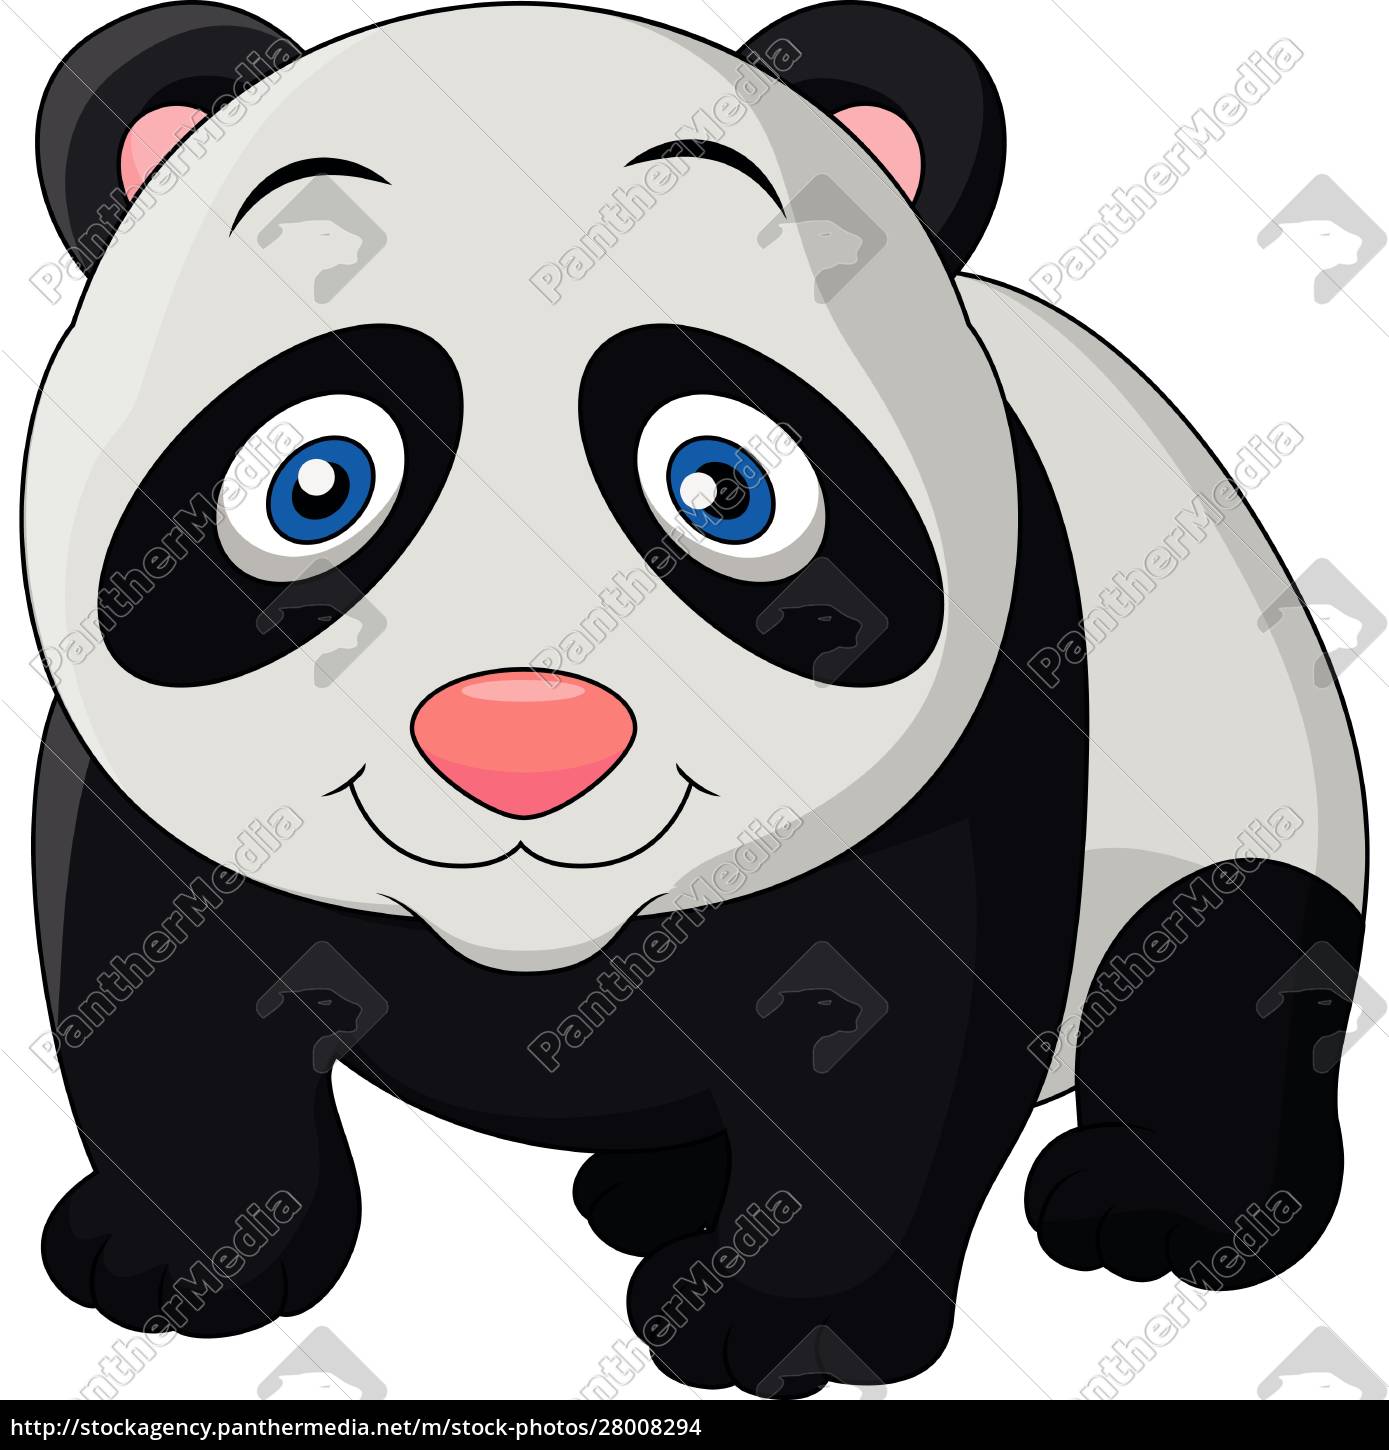 Desenho fofo do bebê panda - Stockphoto #28011987